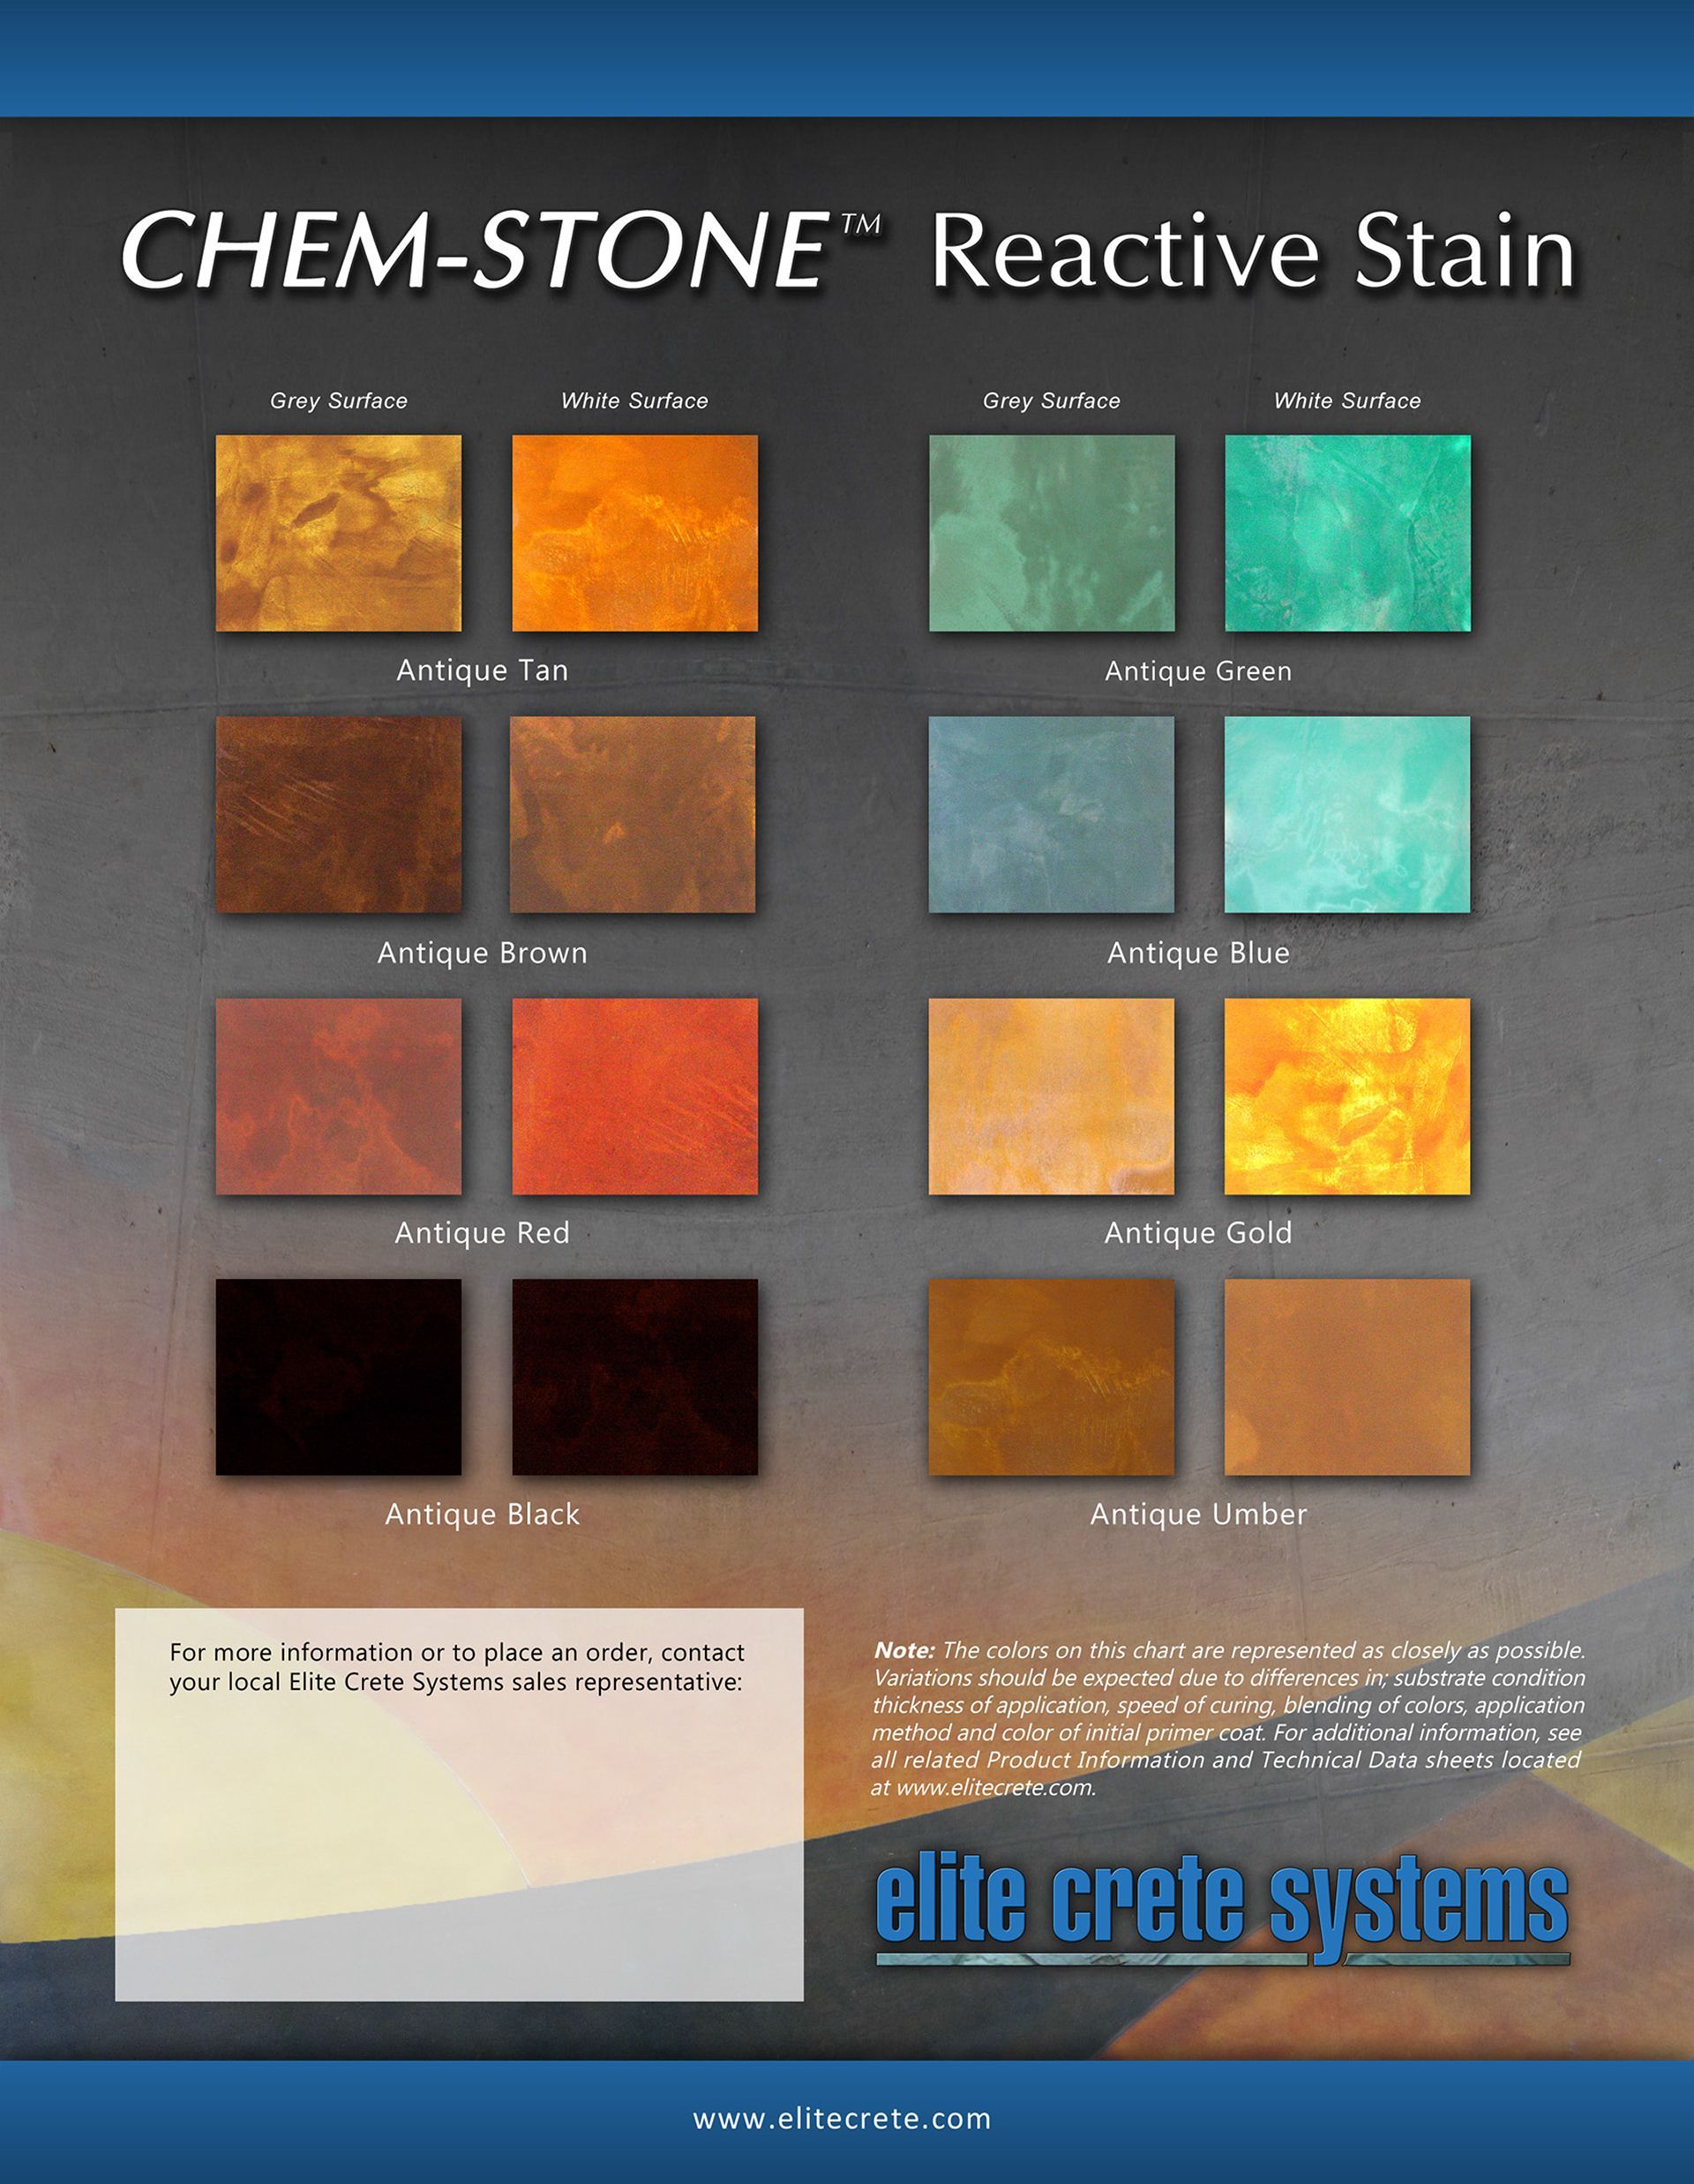 Chem-Stone Reactive Stain